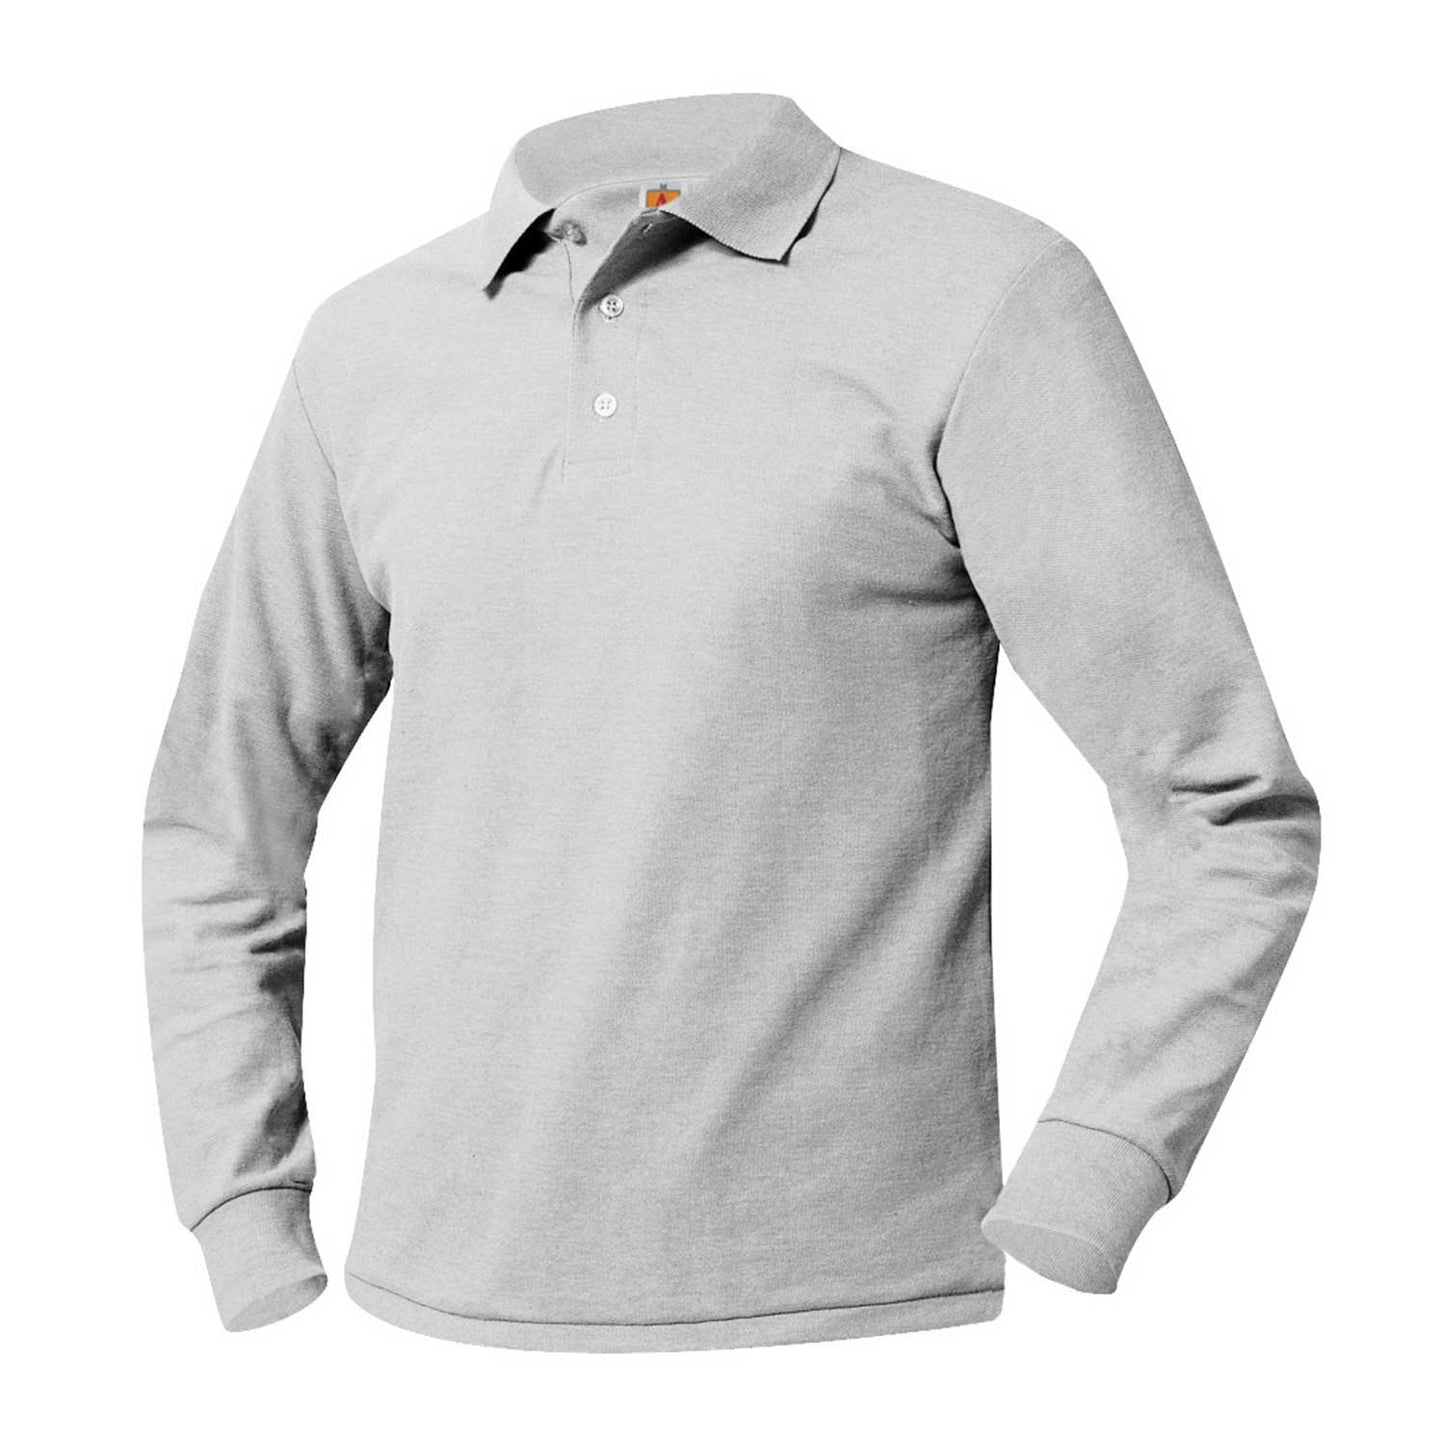 Unisex Pique Polo Shirt, Long Sleeves, Ribbed Cuffs w/Logo - 1109